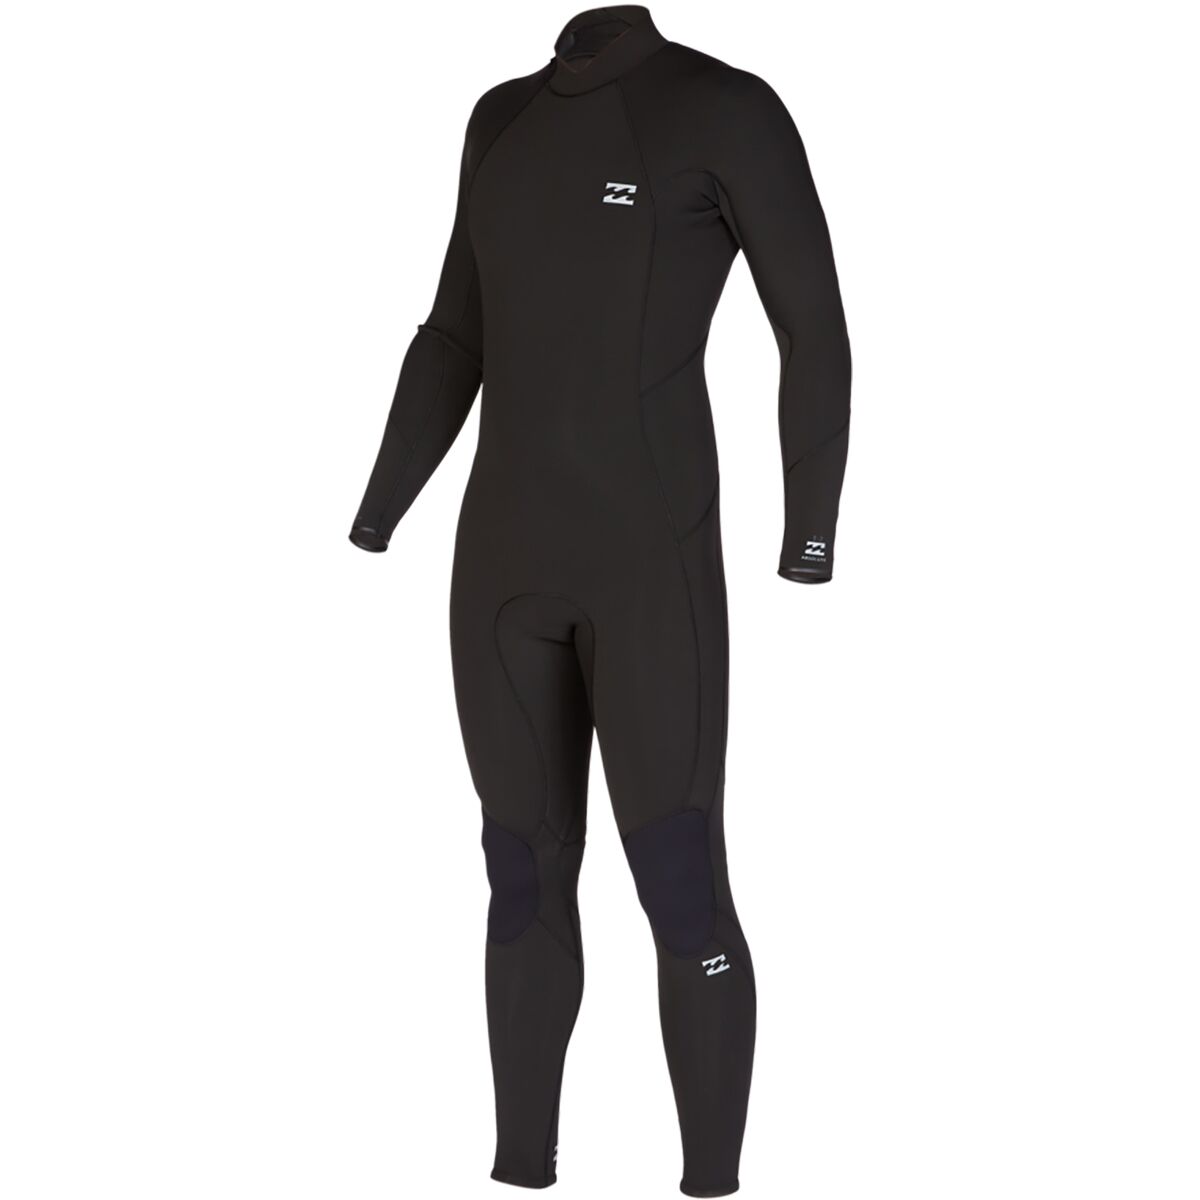 Billabong 3/2 Absolute Back-Zip Full GBS Wetsuit - Men's